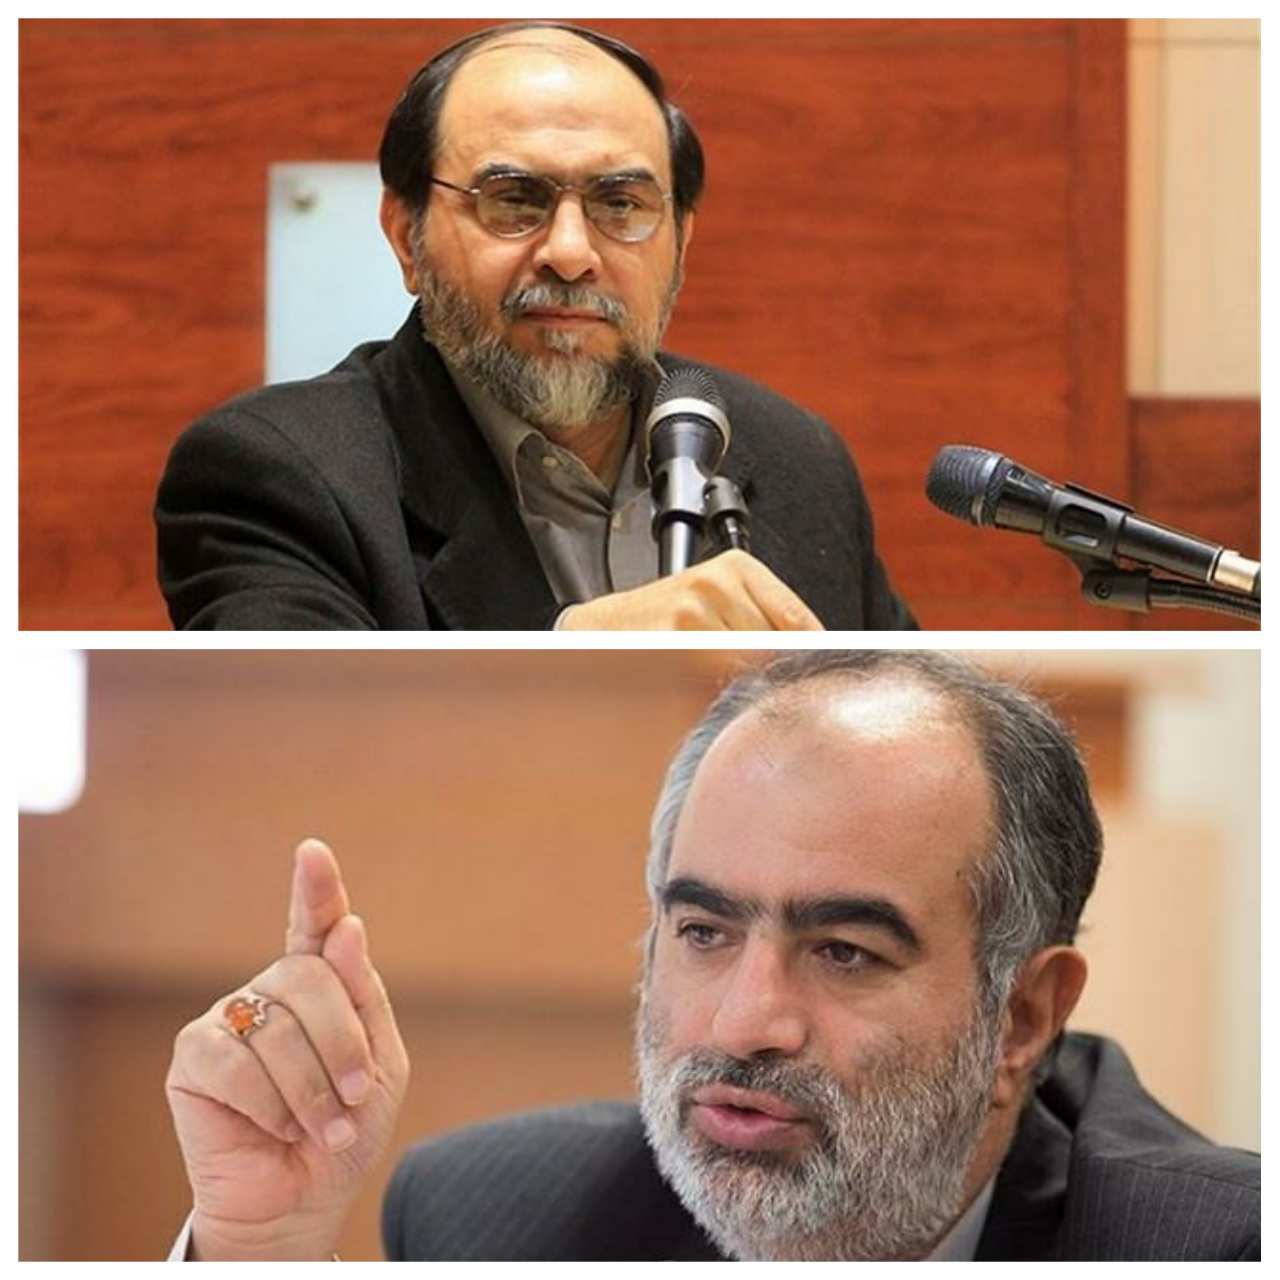 حسام الدین آشنا و حسن رحیم پور ازغدی,اخبار سیاسی,خبرهای سیاسی,اخبار سیاسی ایران